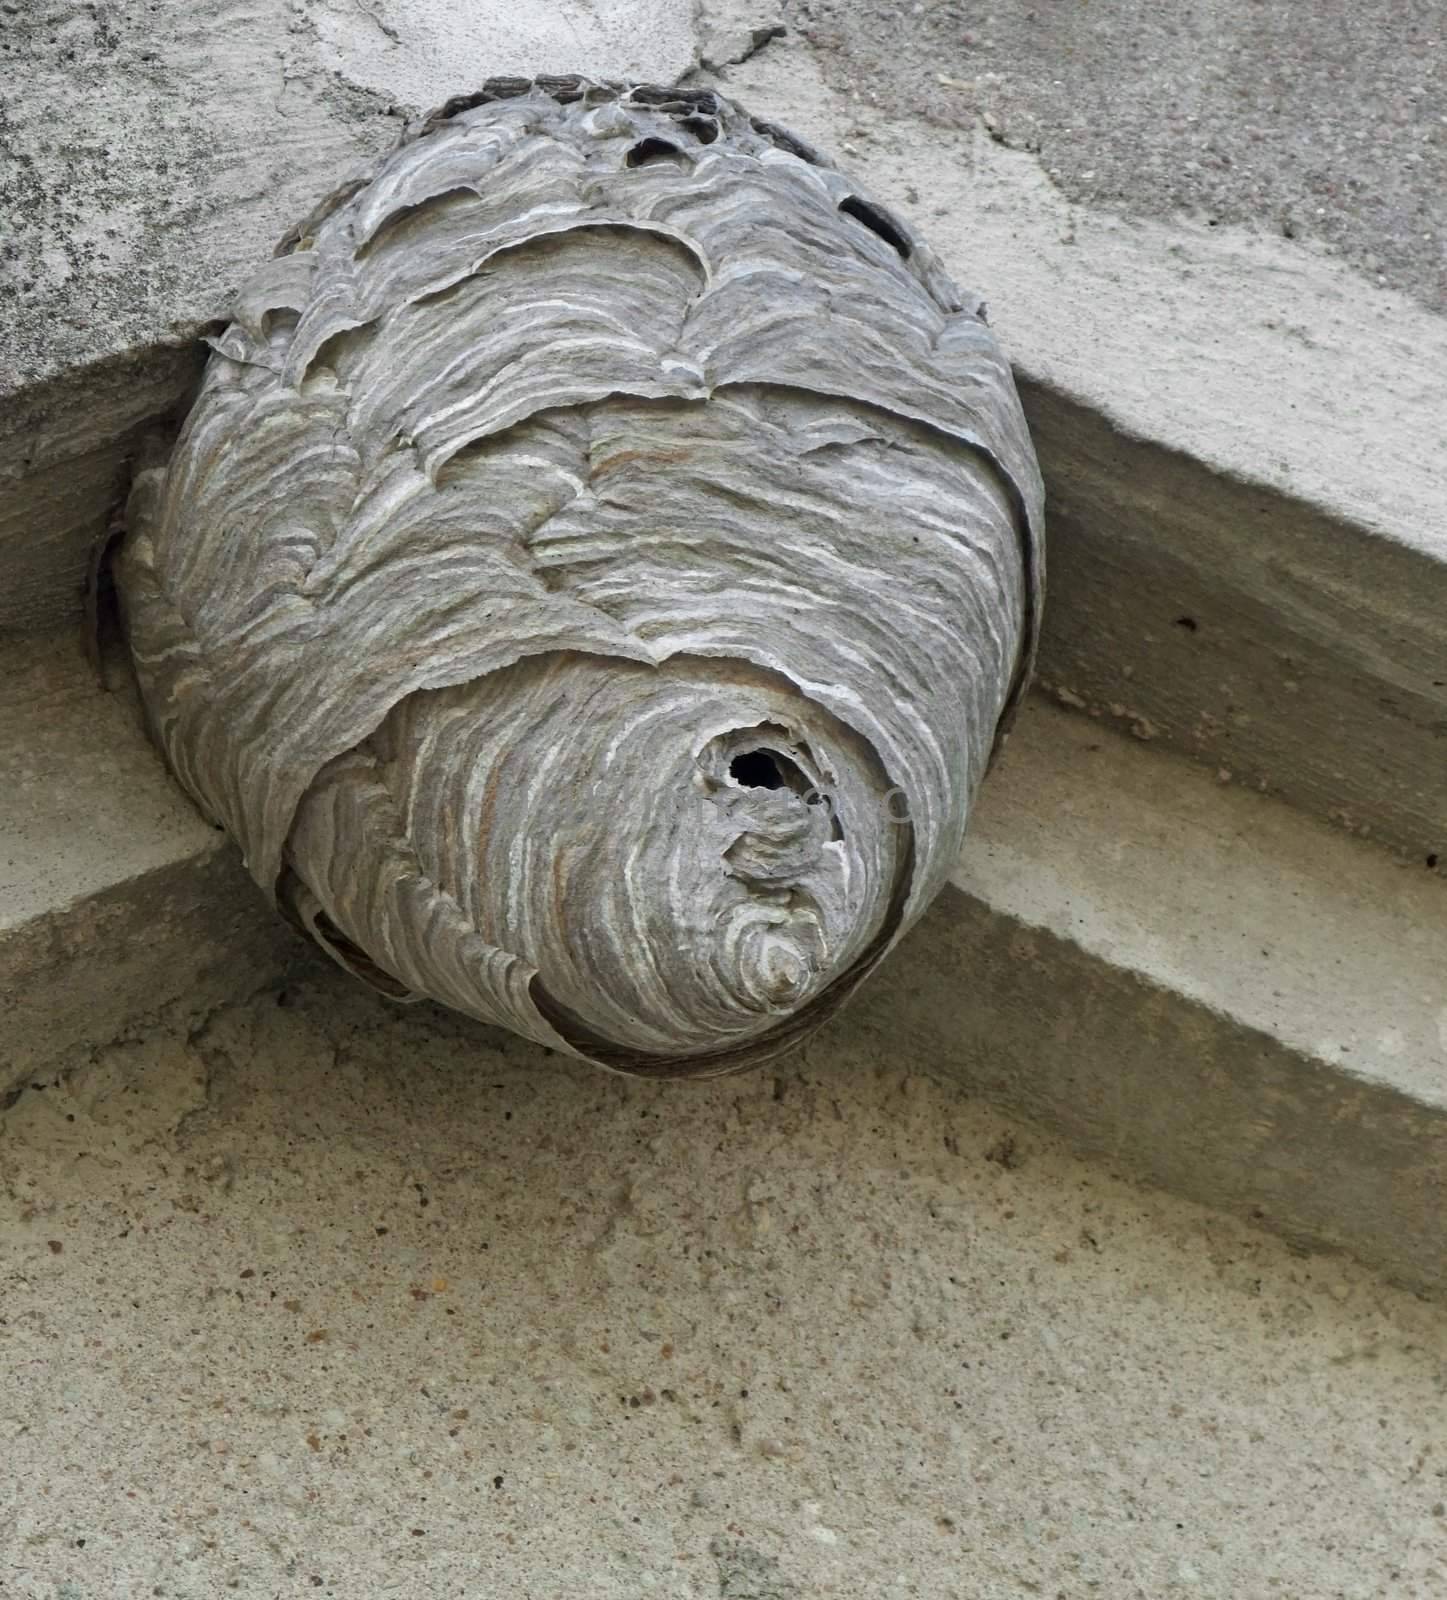 hornets nest under a roof overhang by gewoldi